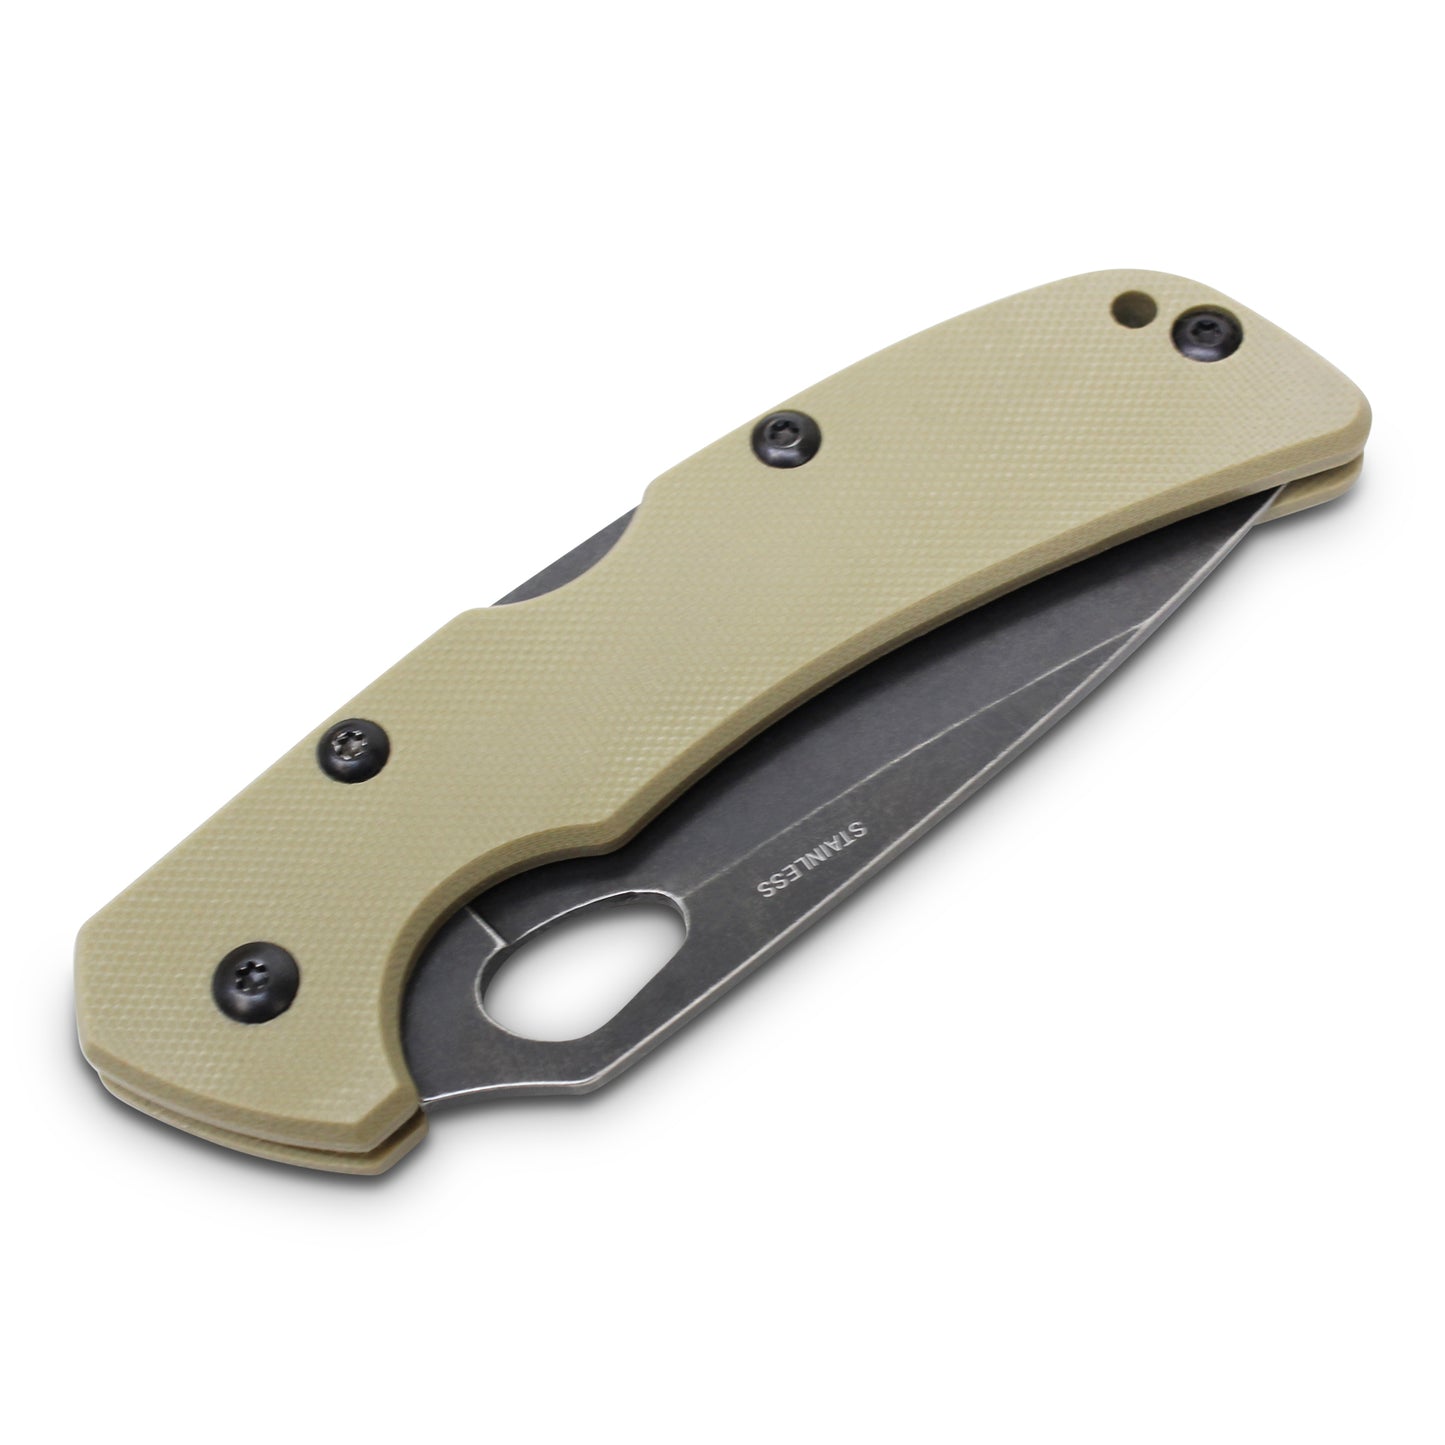 Xhunter Cobra Desert Rat Drop Point Blade Folding Knife - Coyote Tan 7.8 Inch Overall #kf0306 Tan